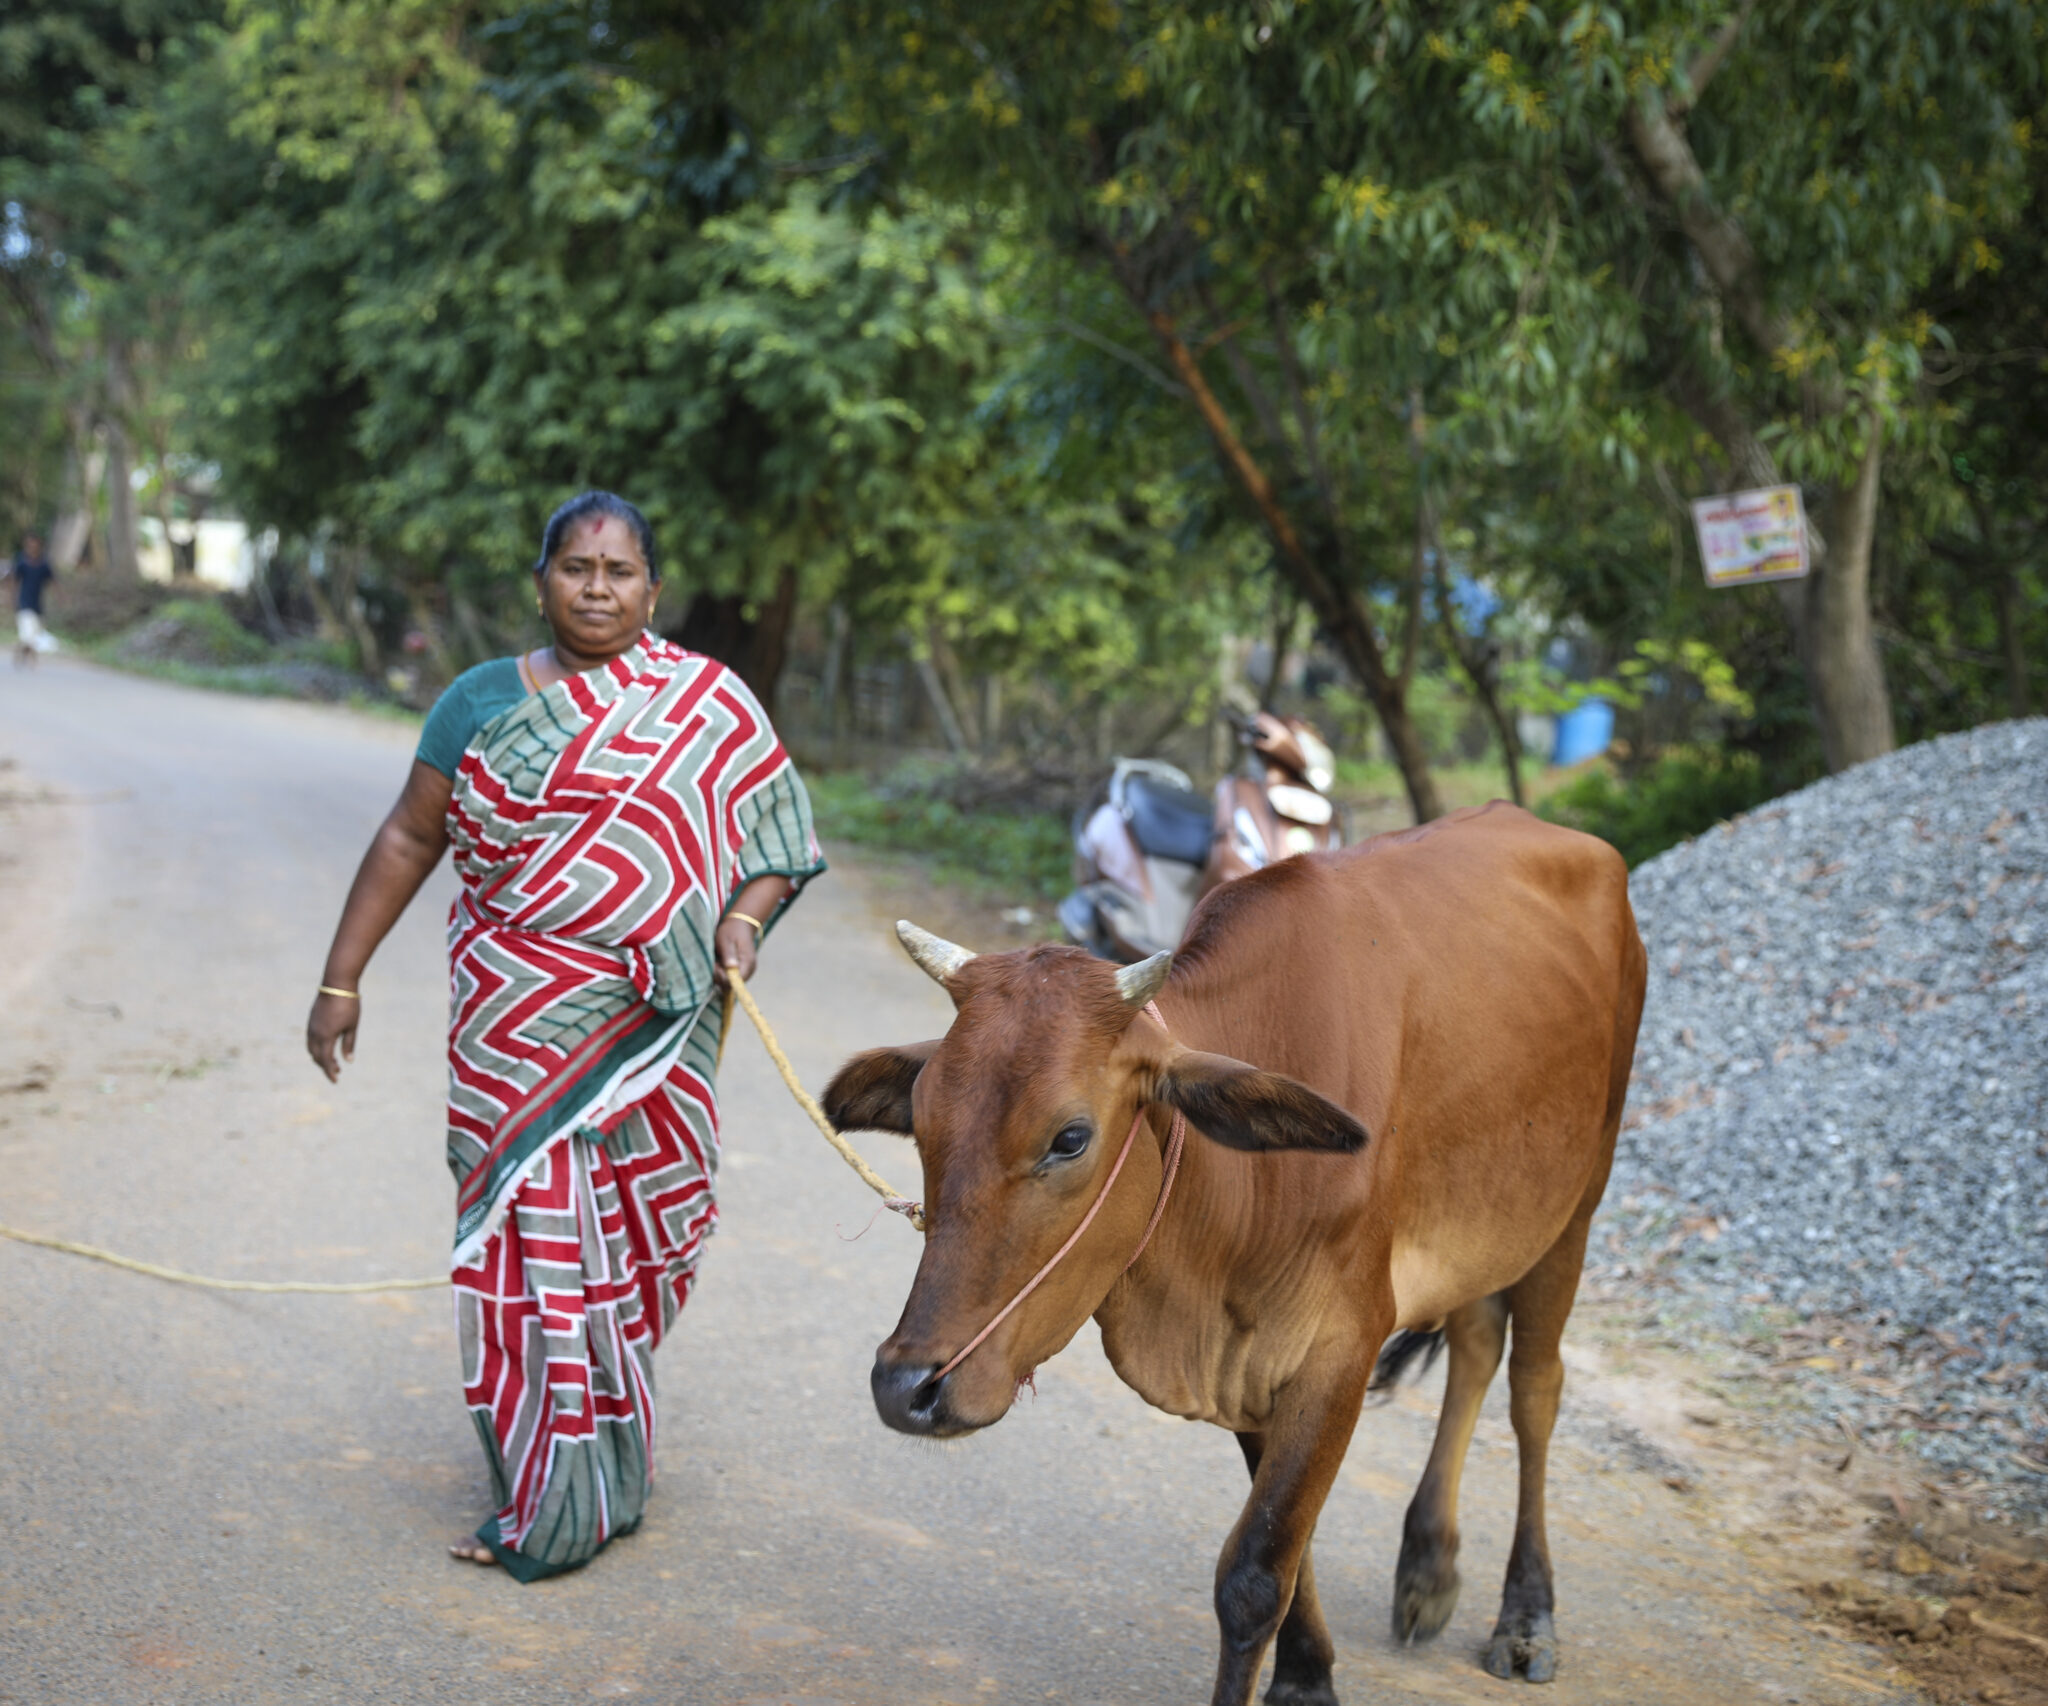 An Indian women is walking alongside with her cow